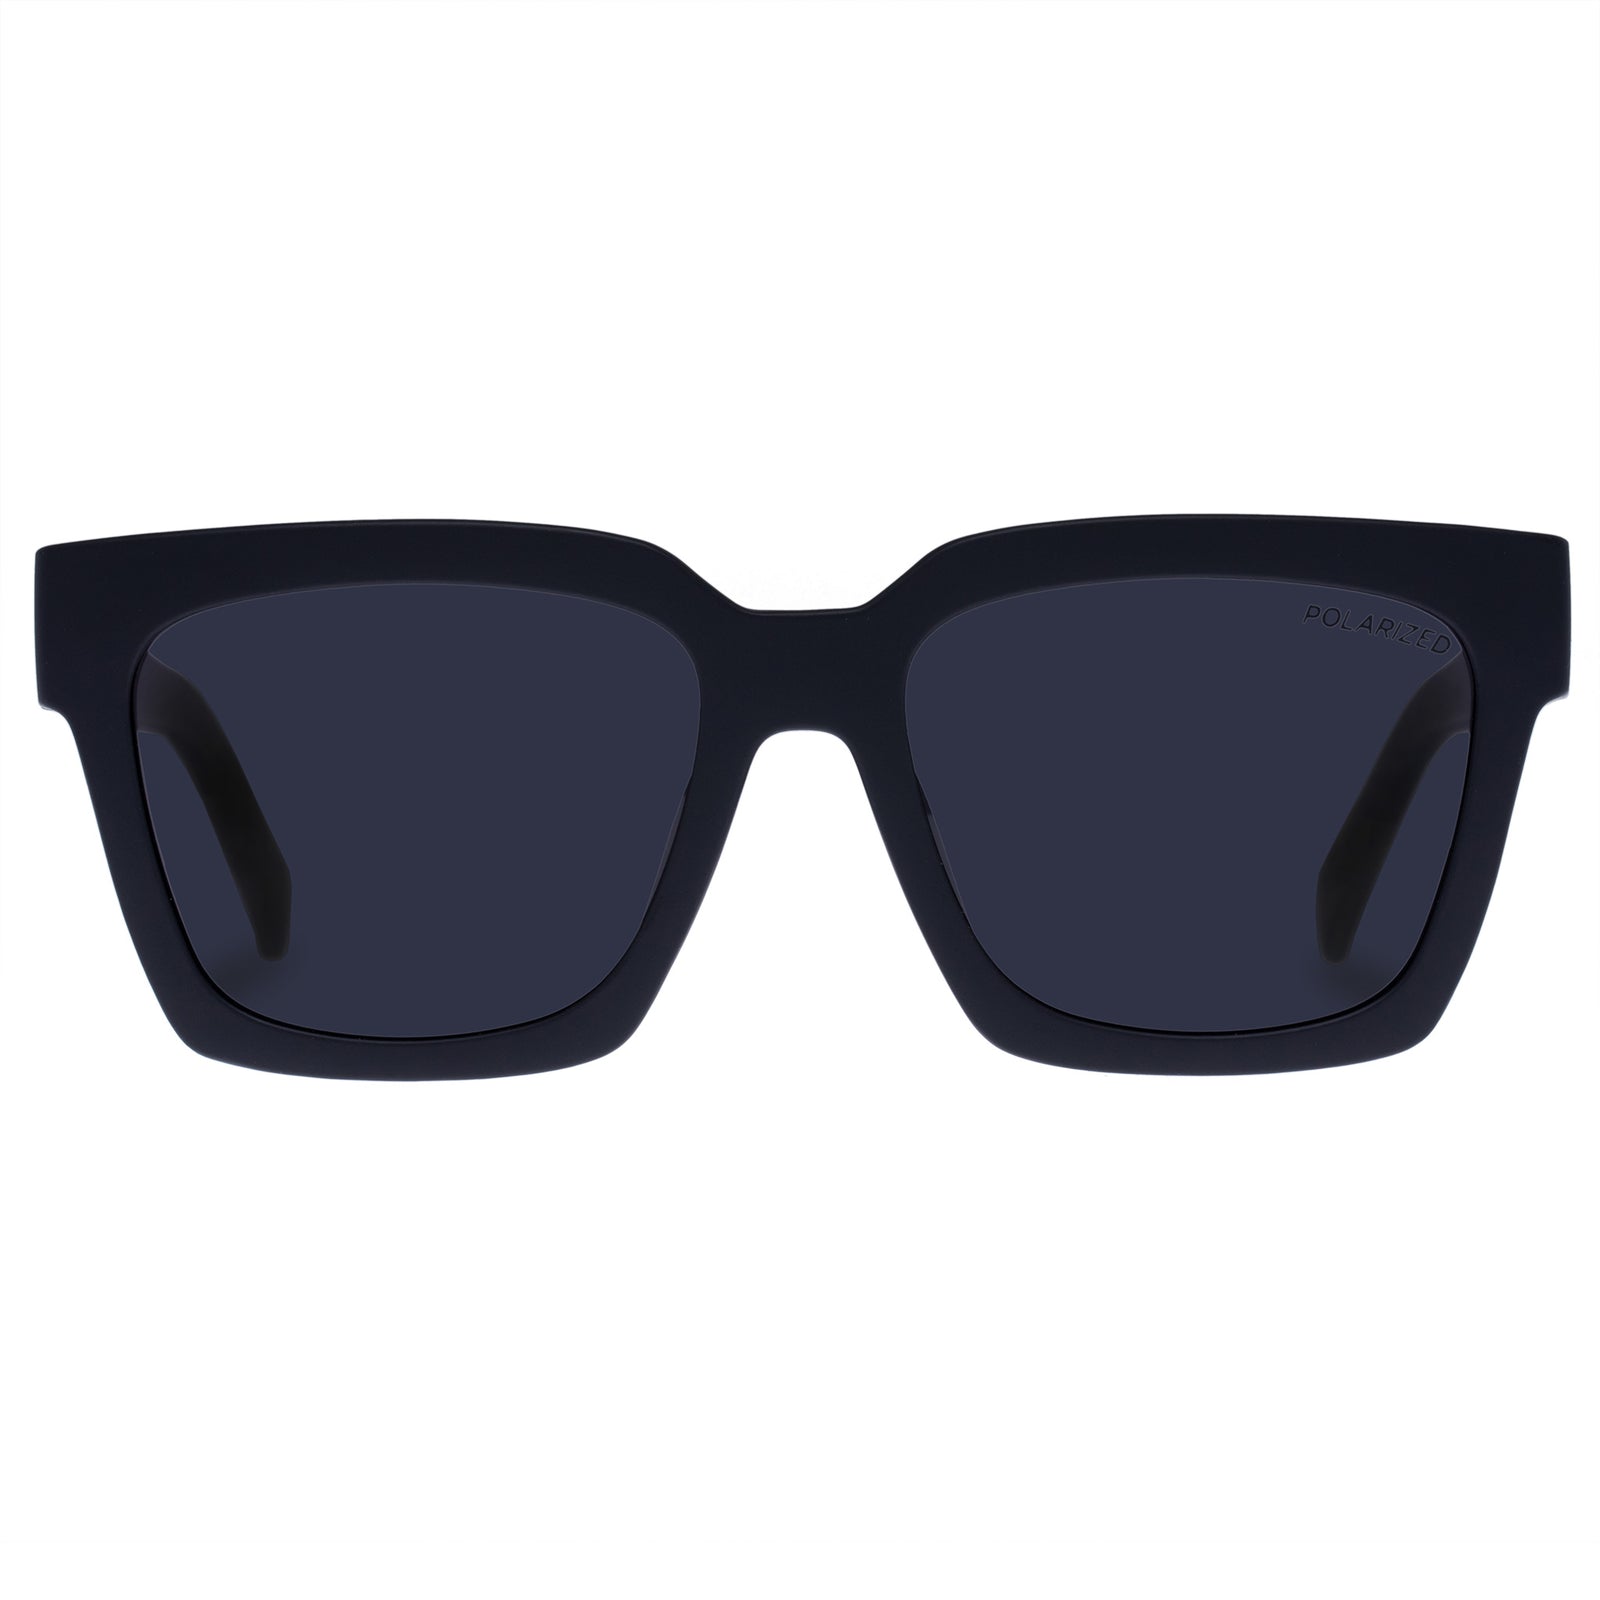 Le Specs Weekend Riot Sunglasses